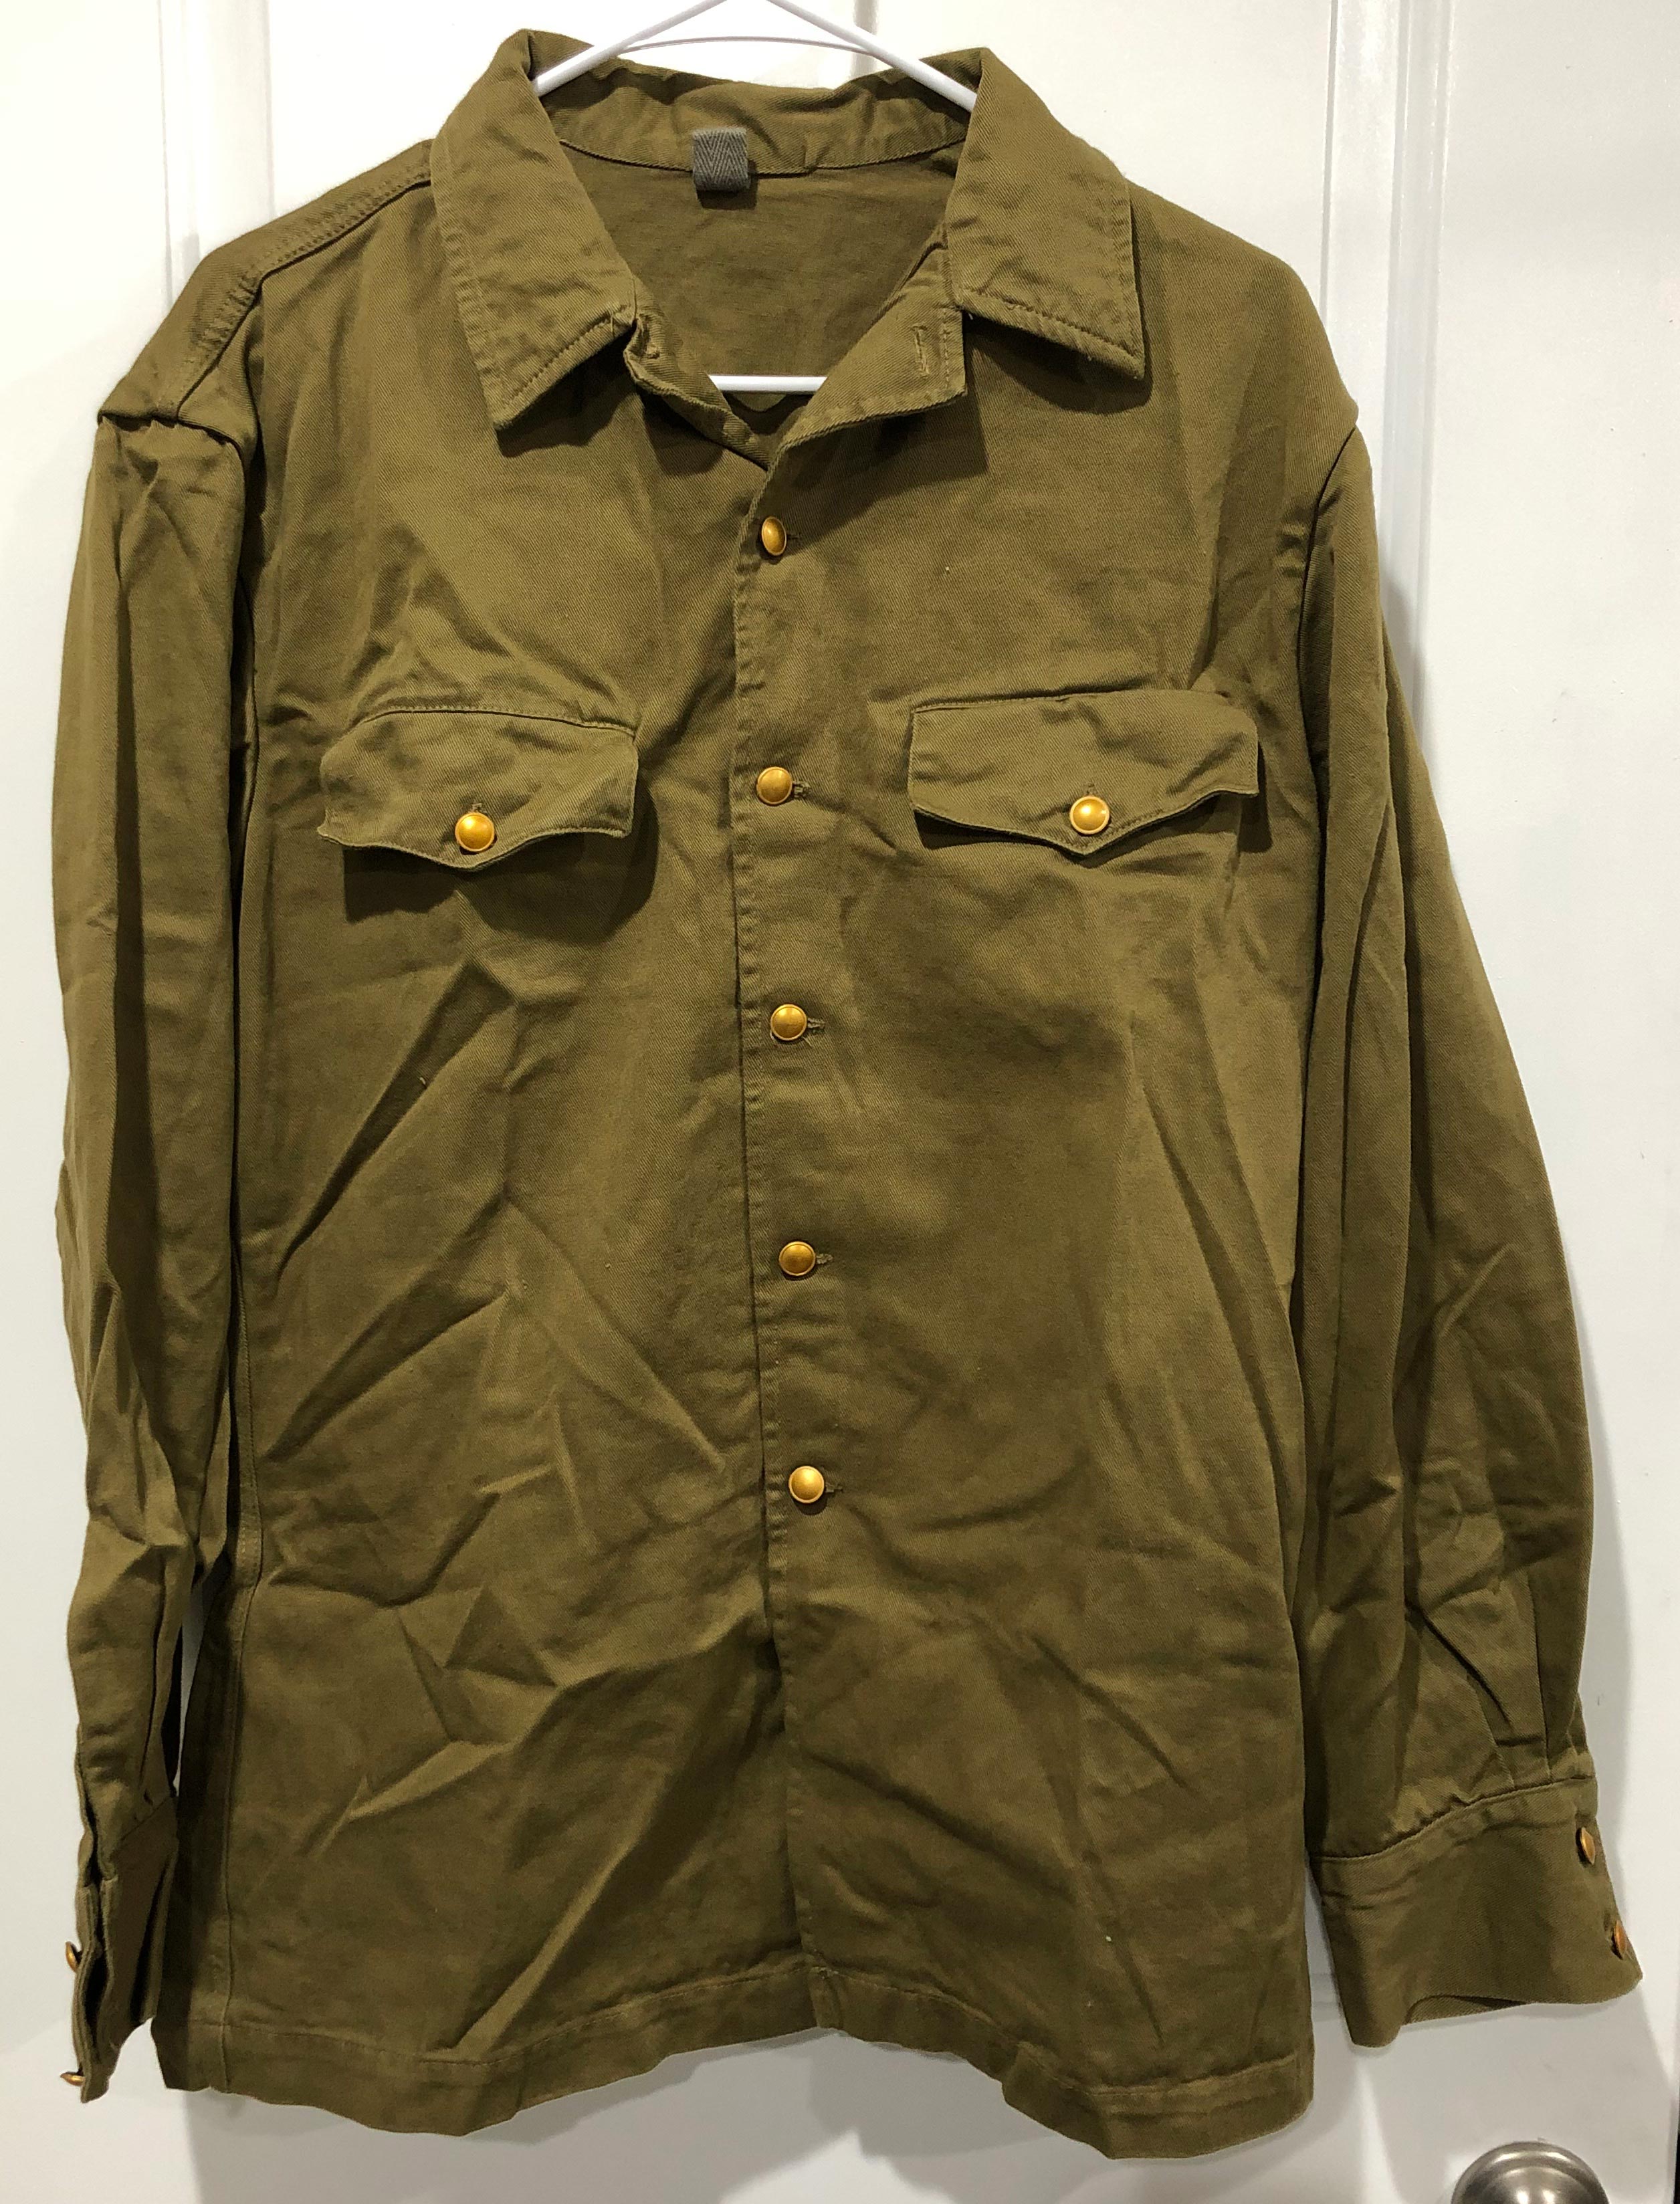 1_jacket_front | KommandoPost.com | KPS Militaria Collection